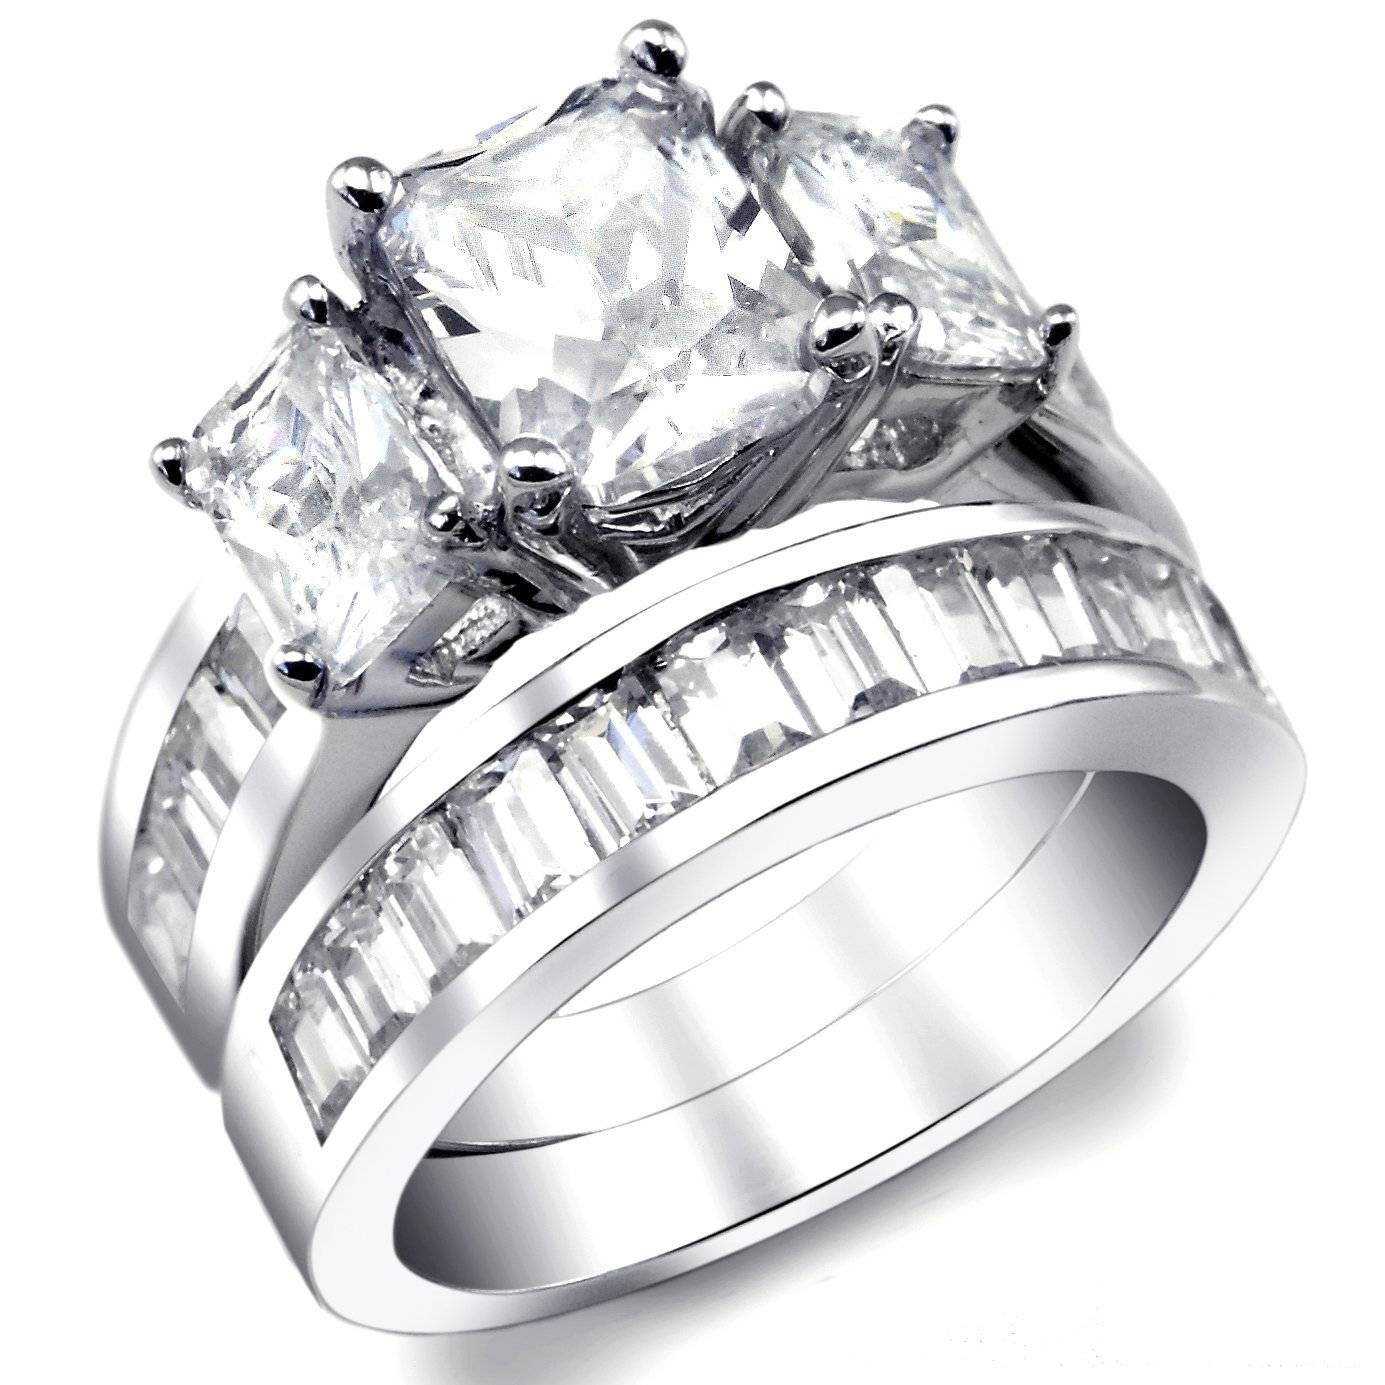 Women's Platinum Wedding Bands
 15 Ideas of Unique Womens Wedding Rings